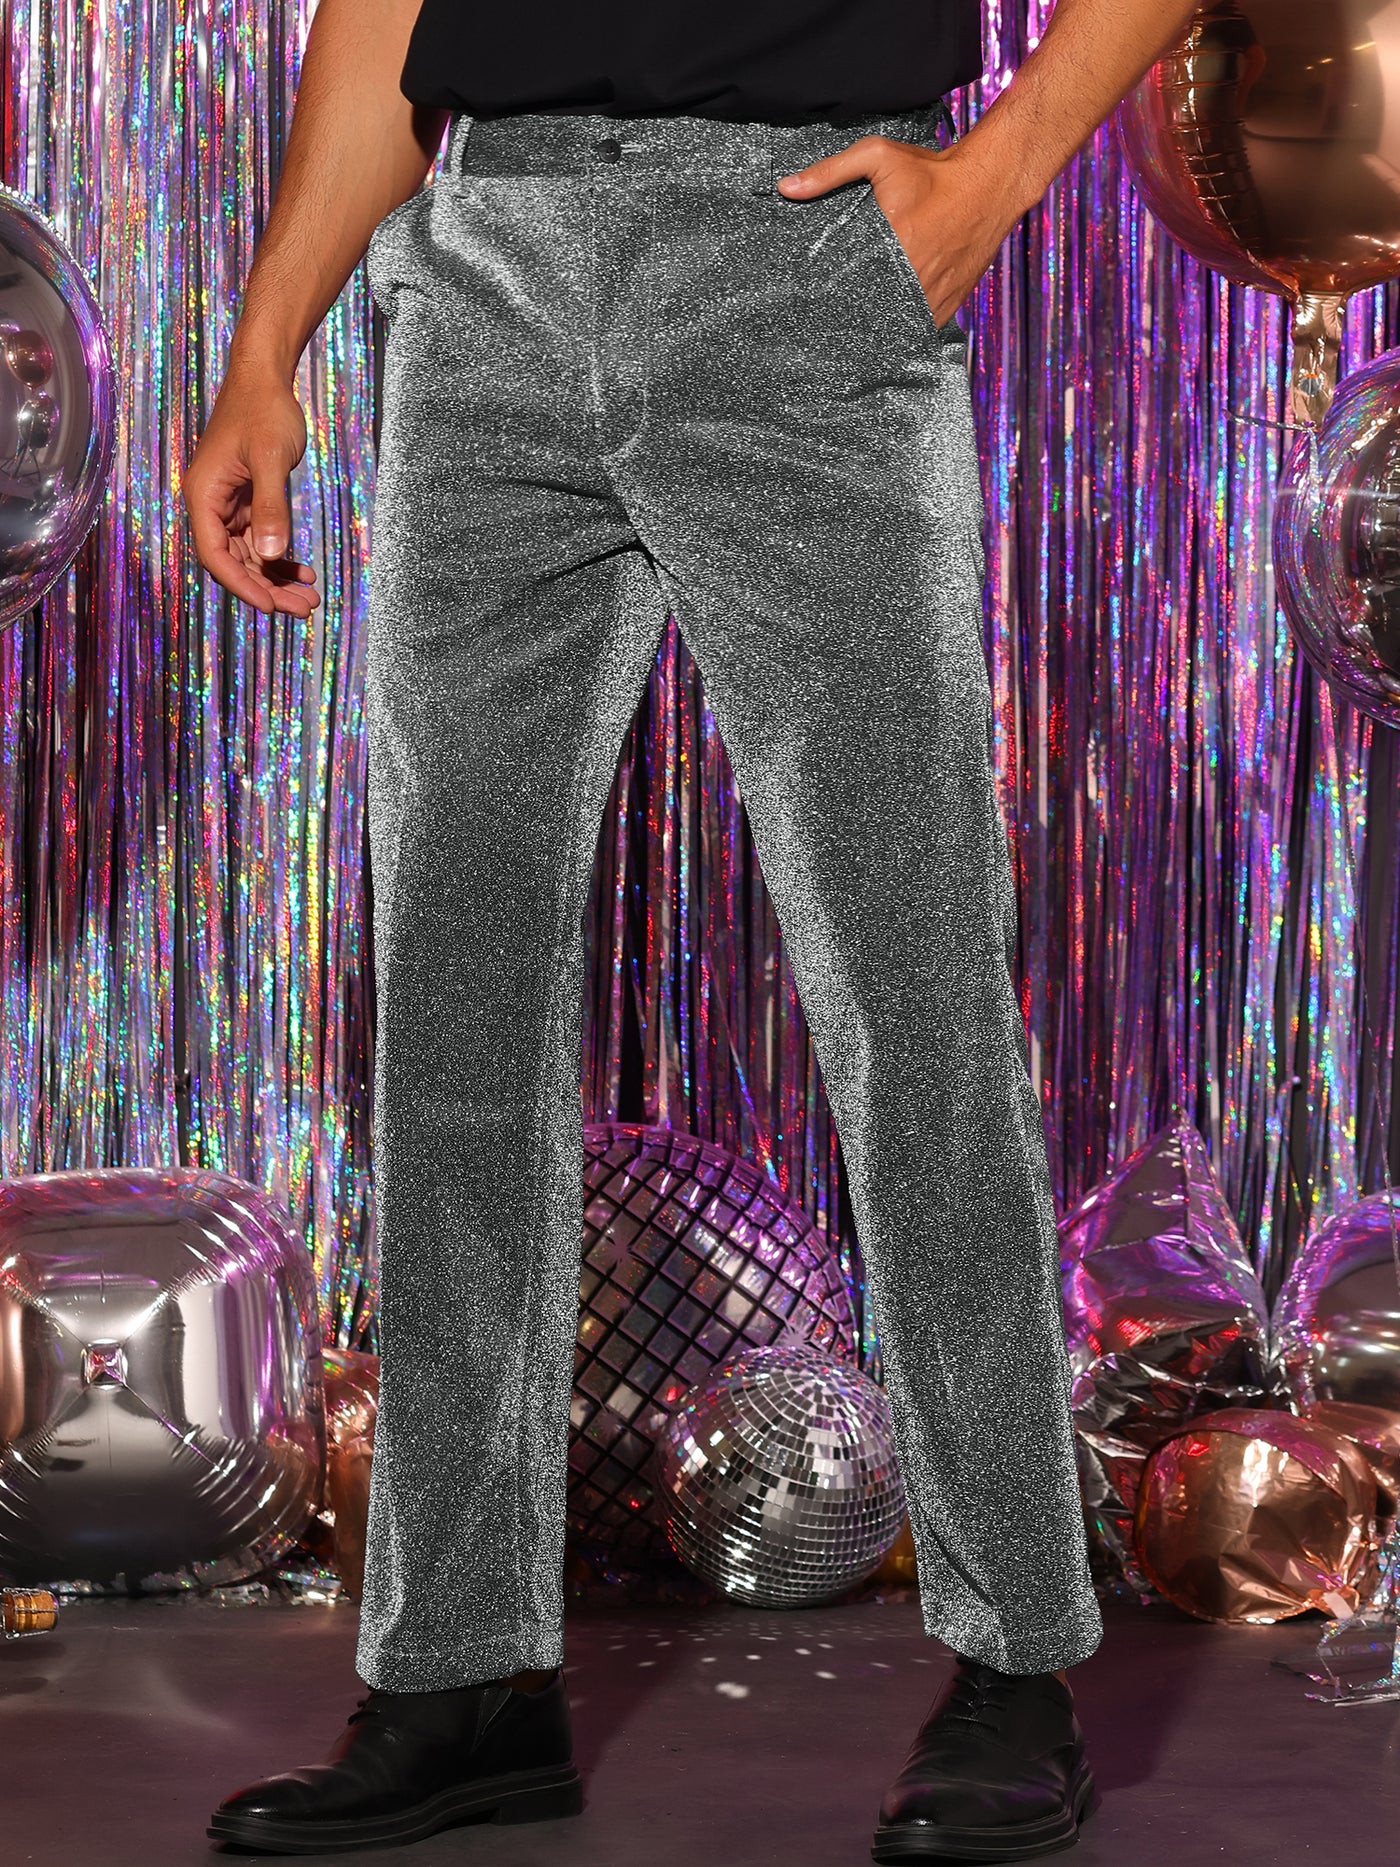 Bublédon Metallic Pants for Men's Straight Leg Party Nightclub Glitter Dress Trouser